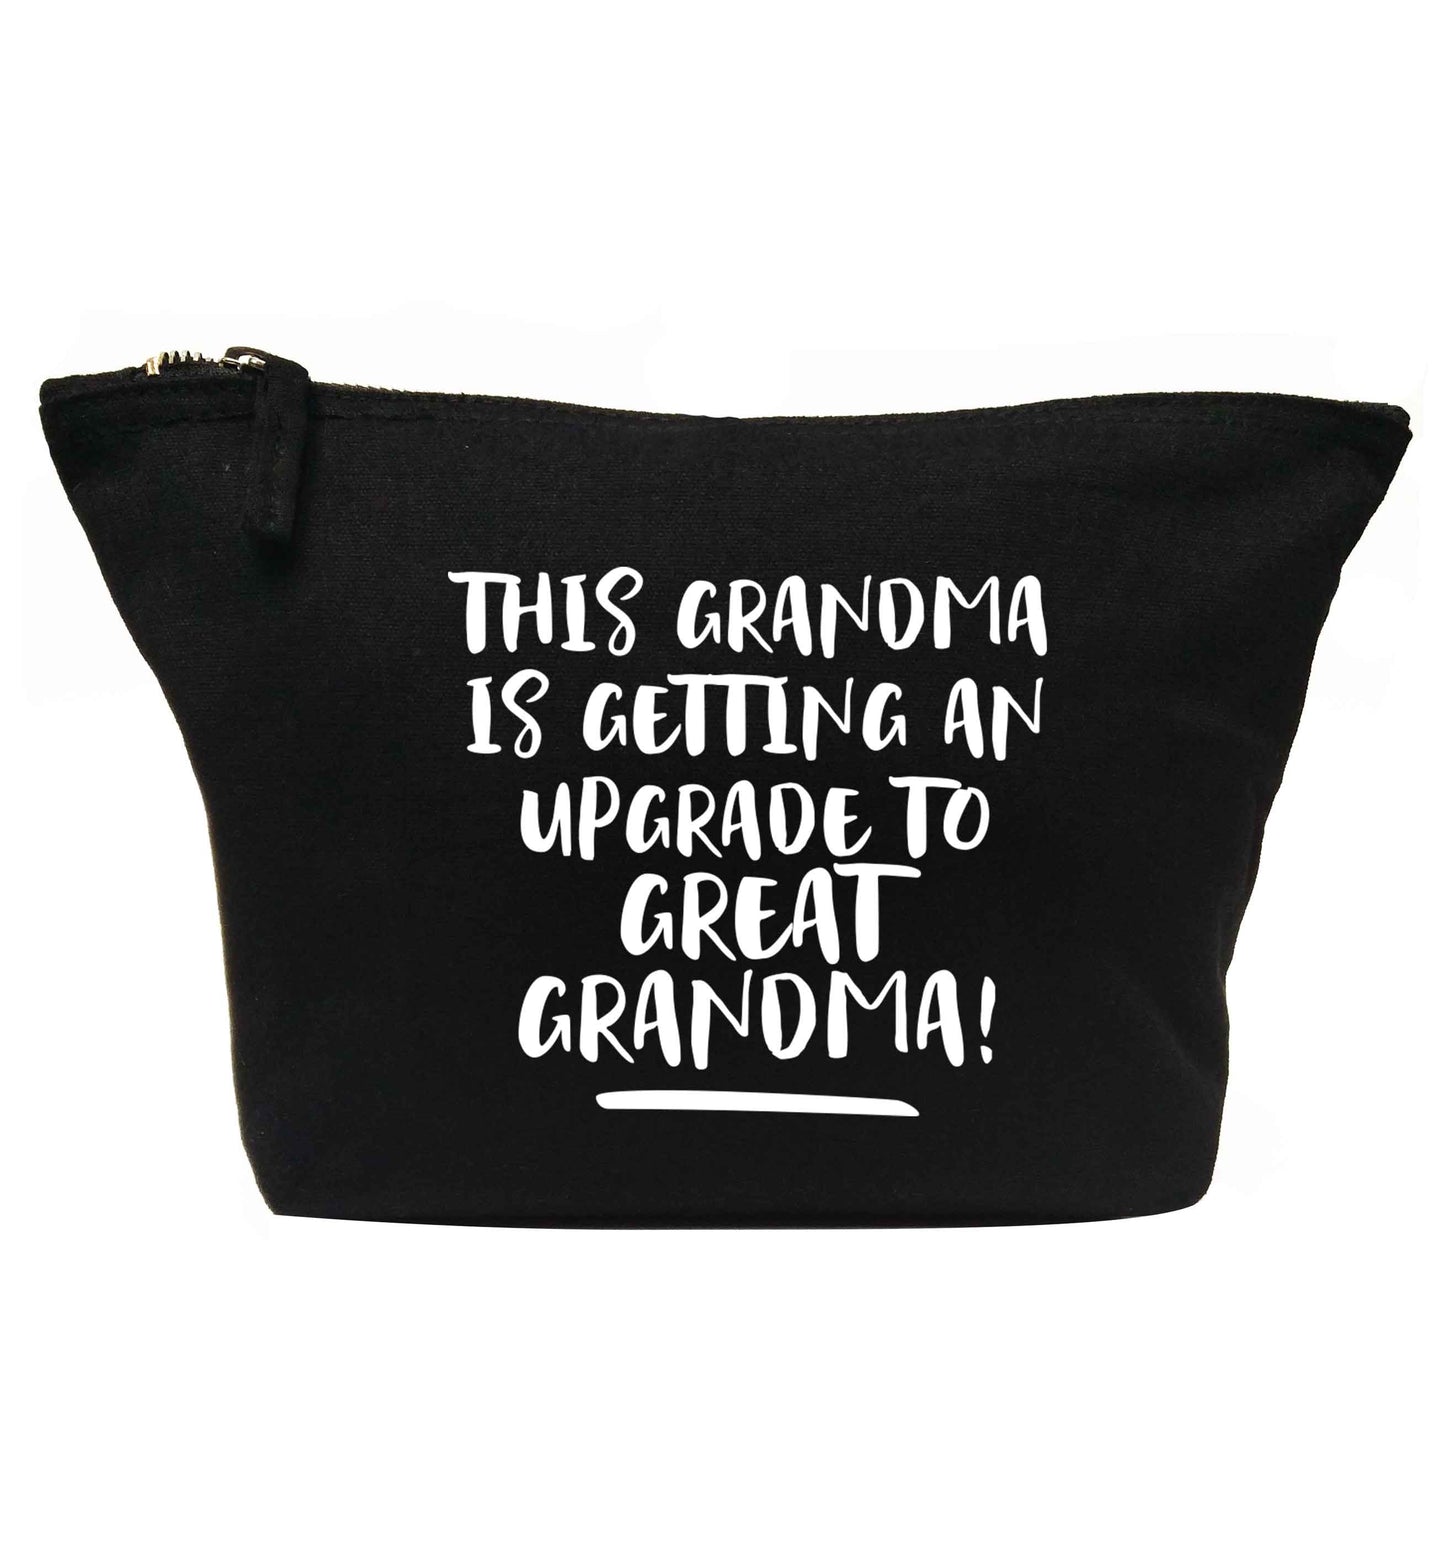 This grandma is getting an upgrade to great grandma! | makeup / wash bag